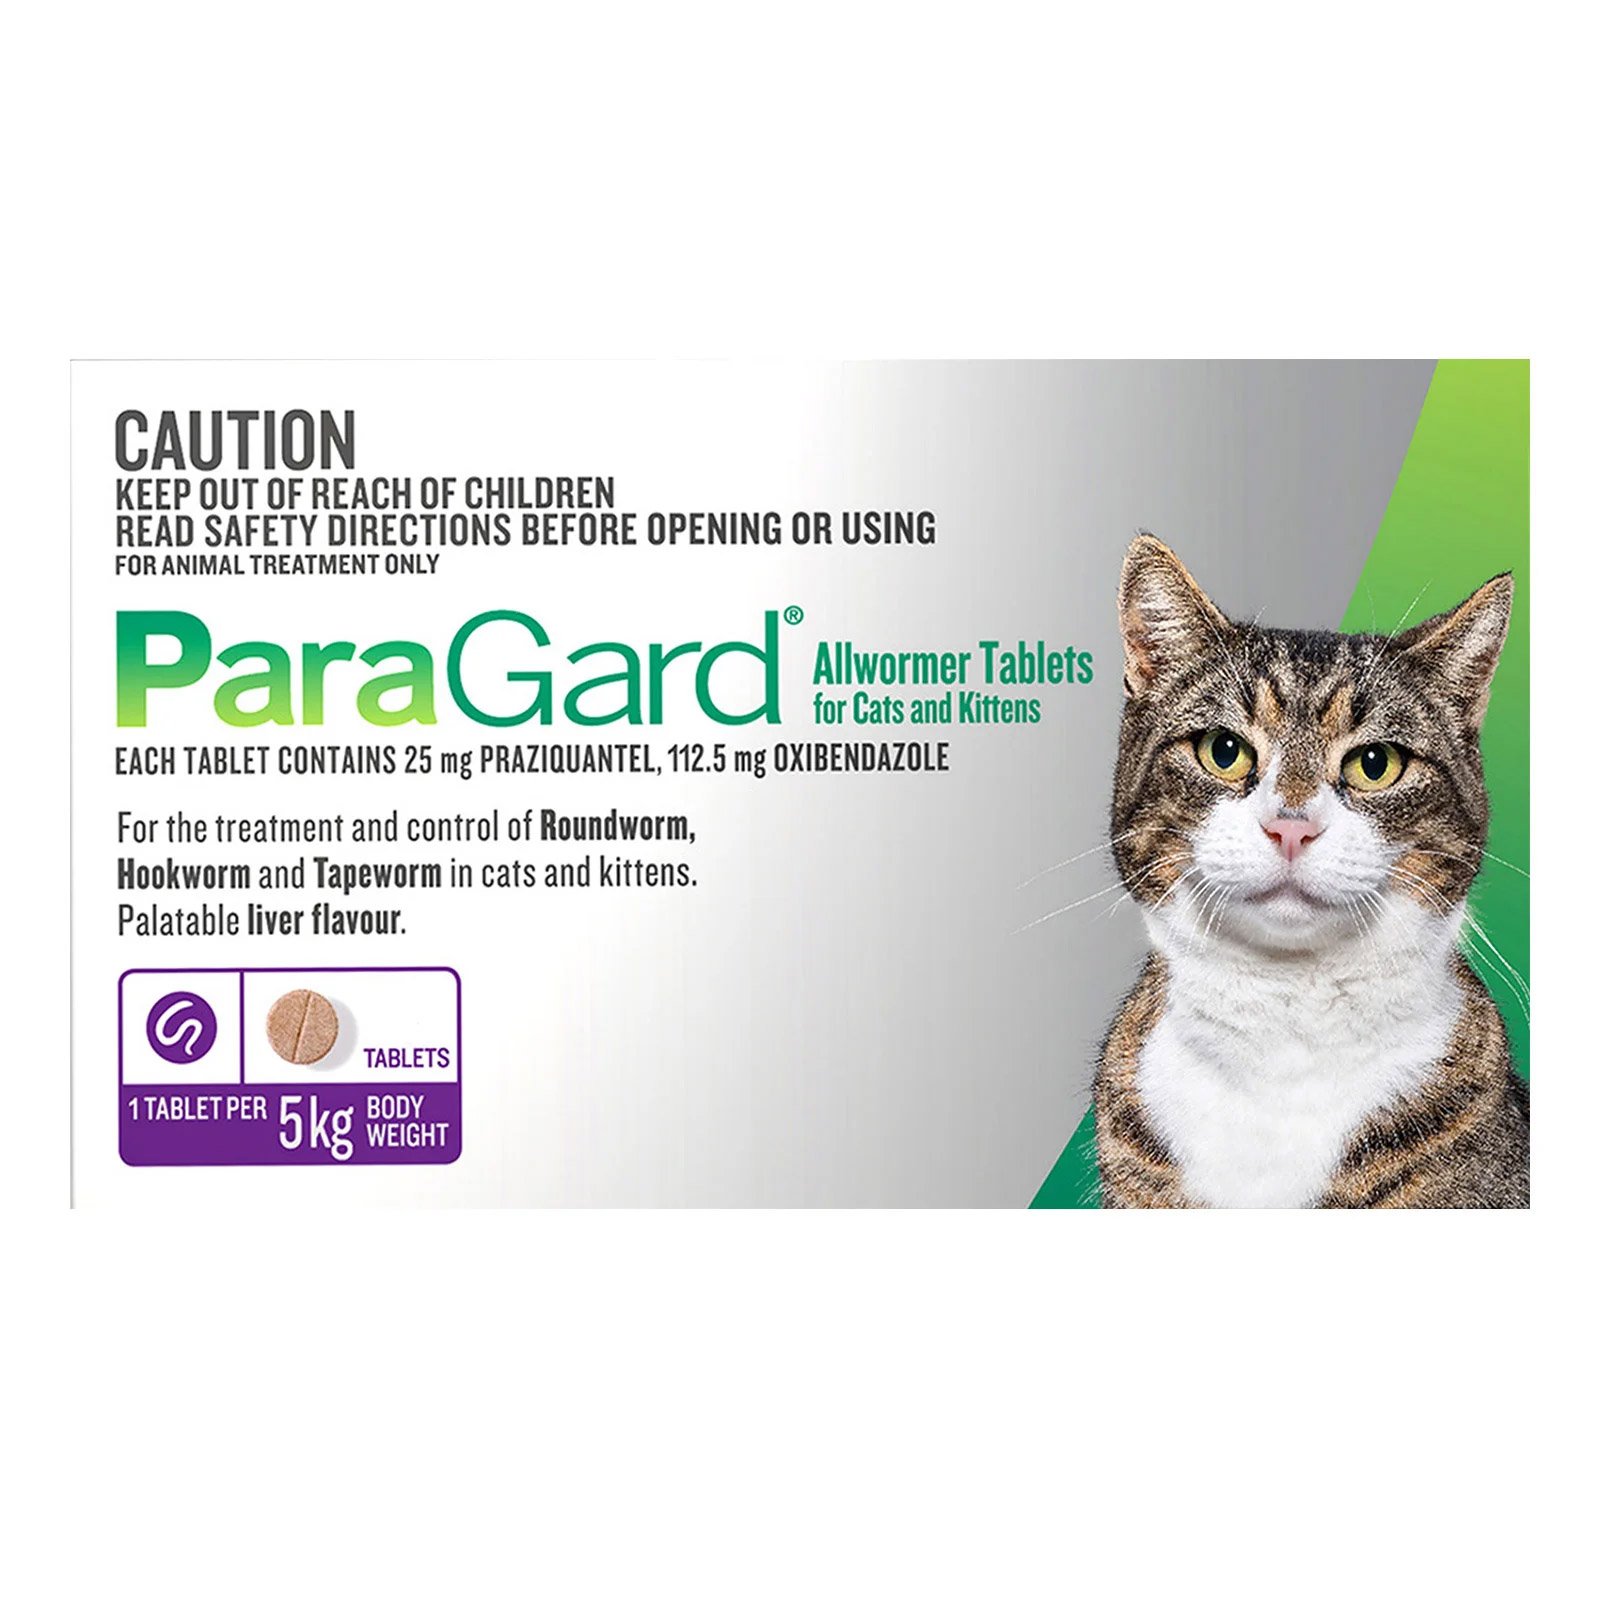 637045254292351868-paragard-broad-spectrum-wormer-for-cats-5kg-2-tab-pack.jpg